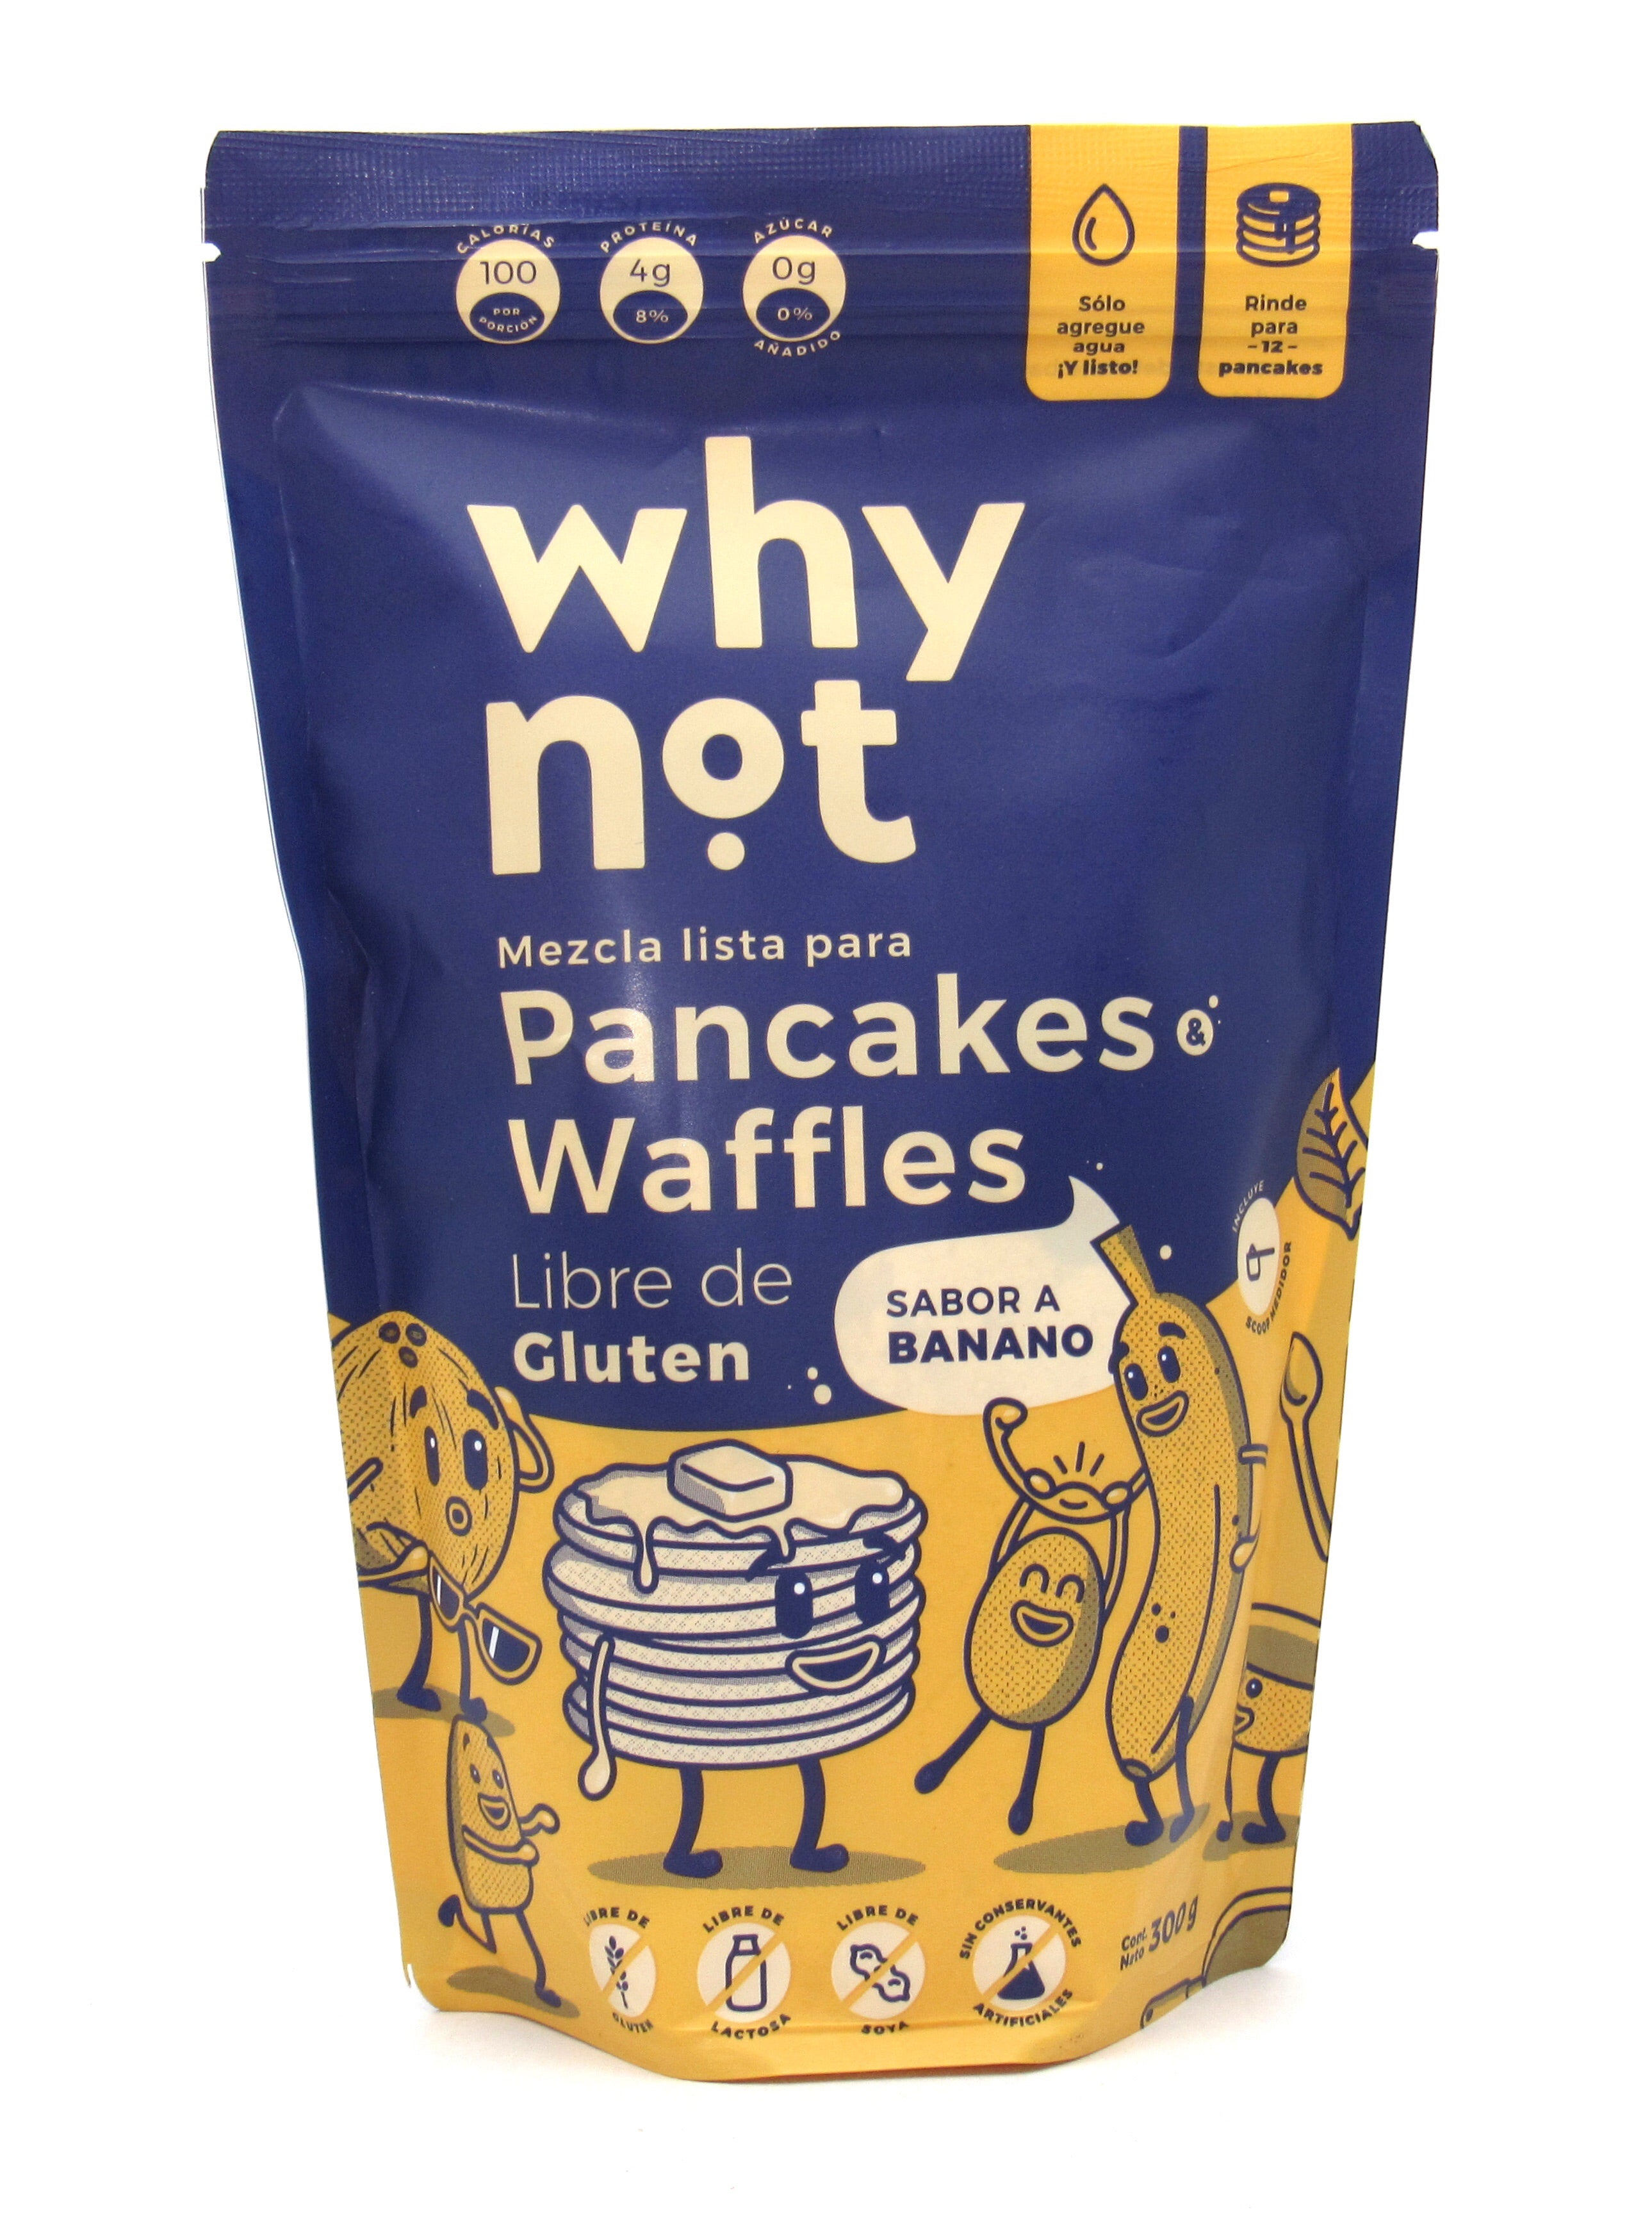 Mezcla de Pancakes y Waffles 300gr (WHY NOT) Banano